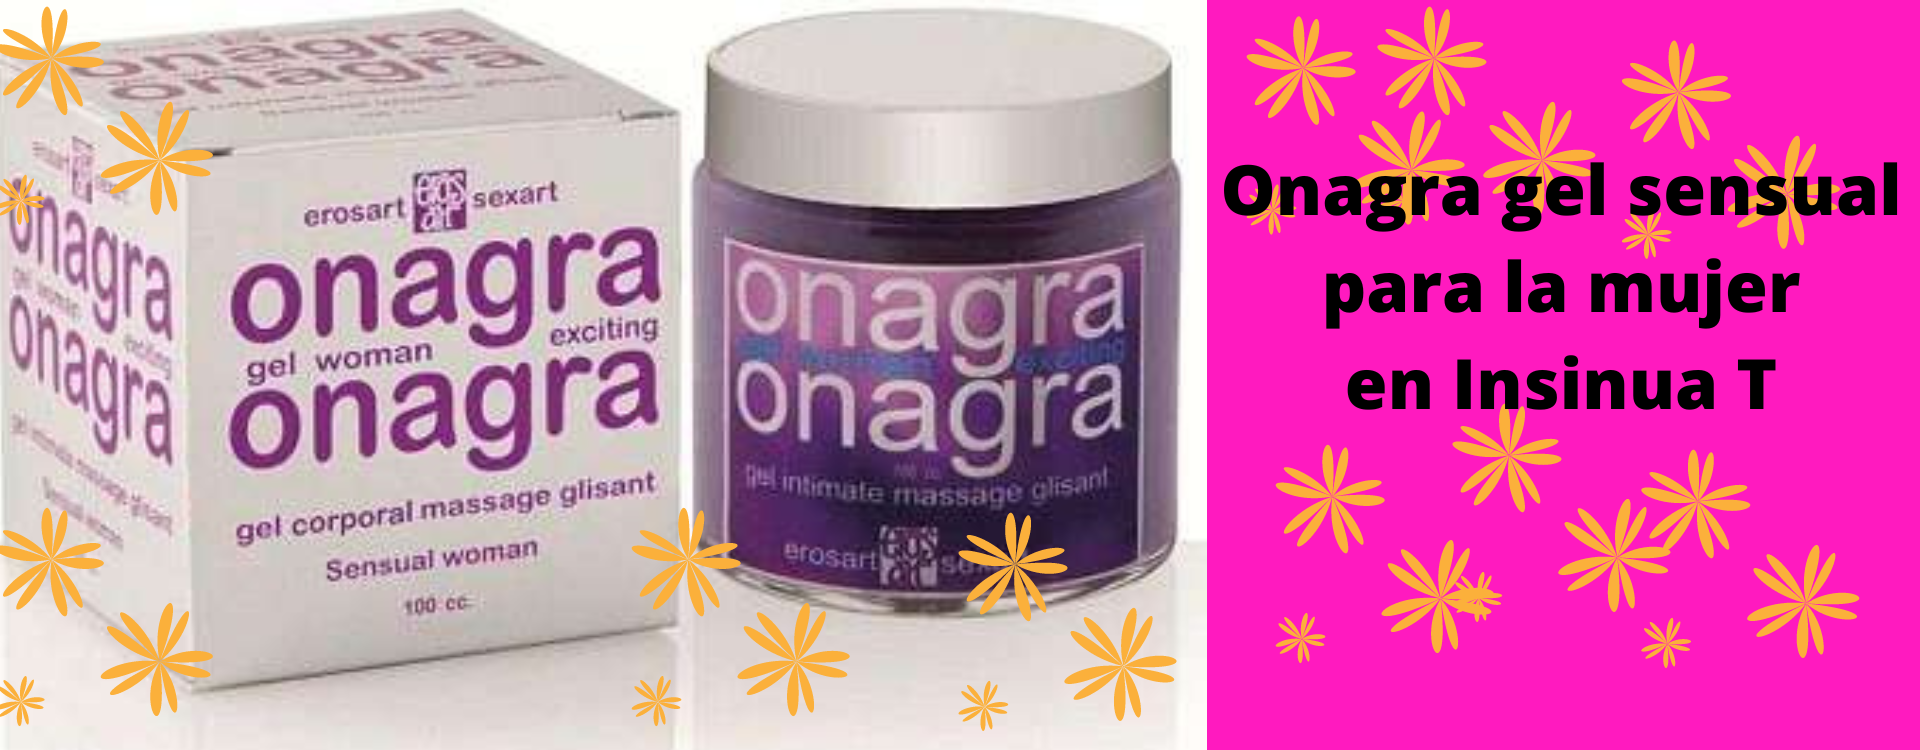 Onagra, gel sensual para mujeres